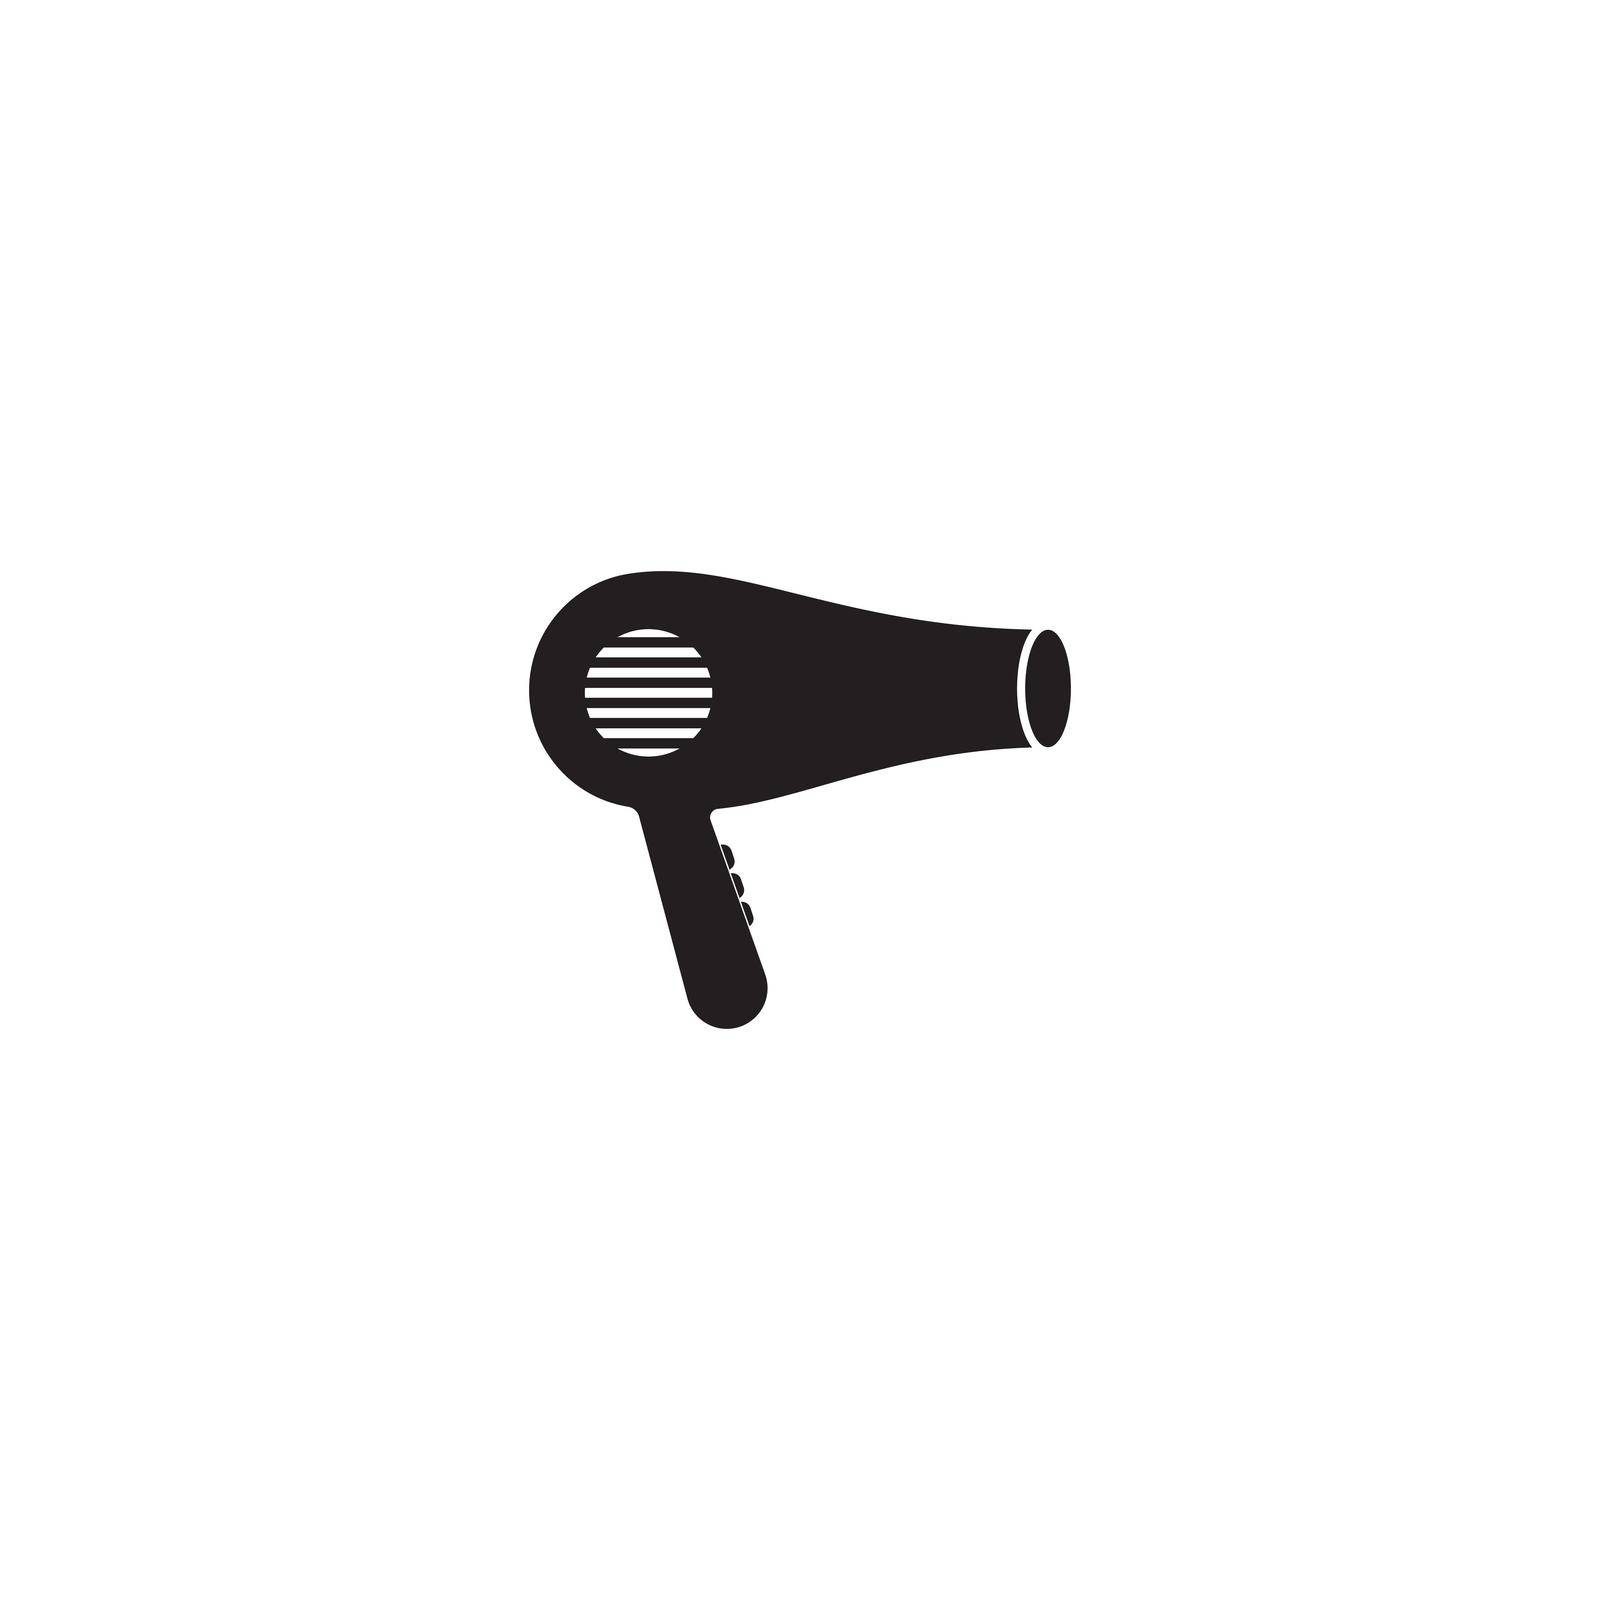 Hair dryer logo vector design illustration background